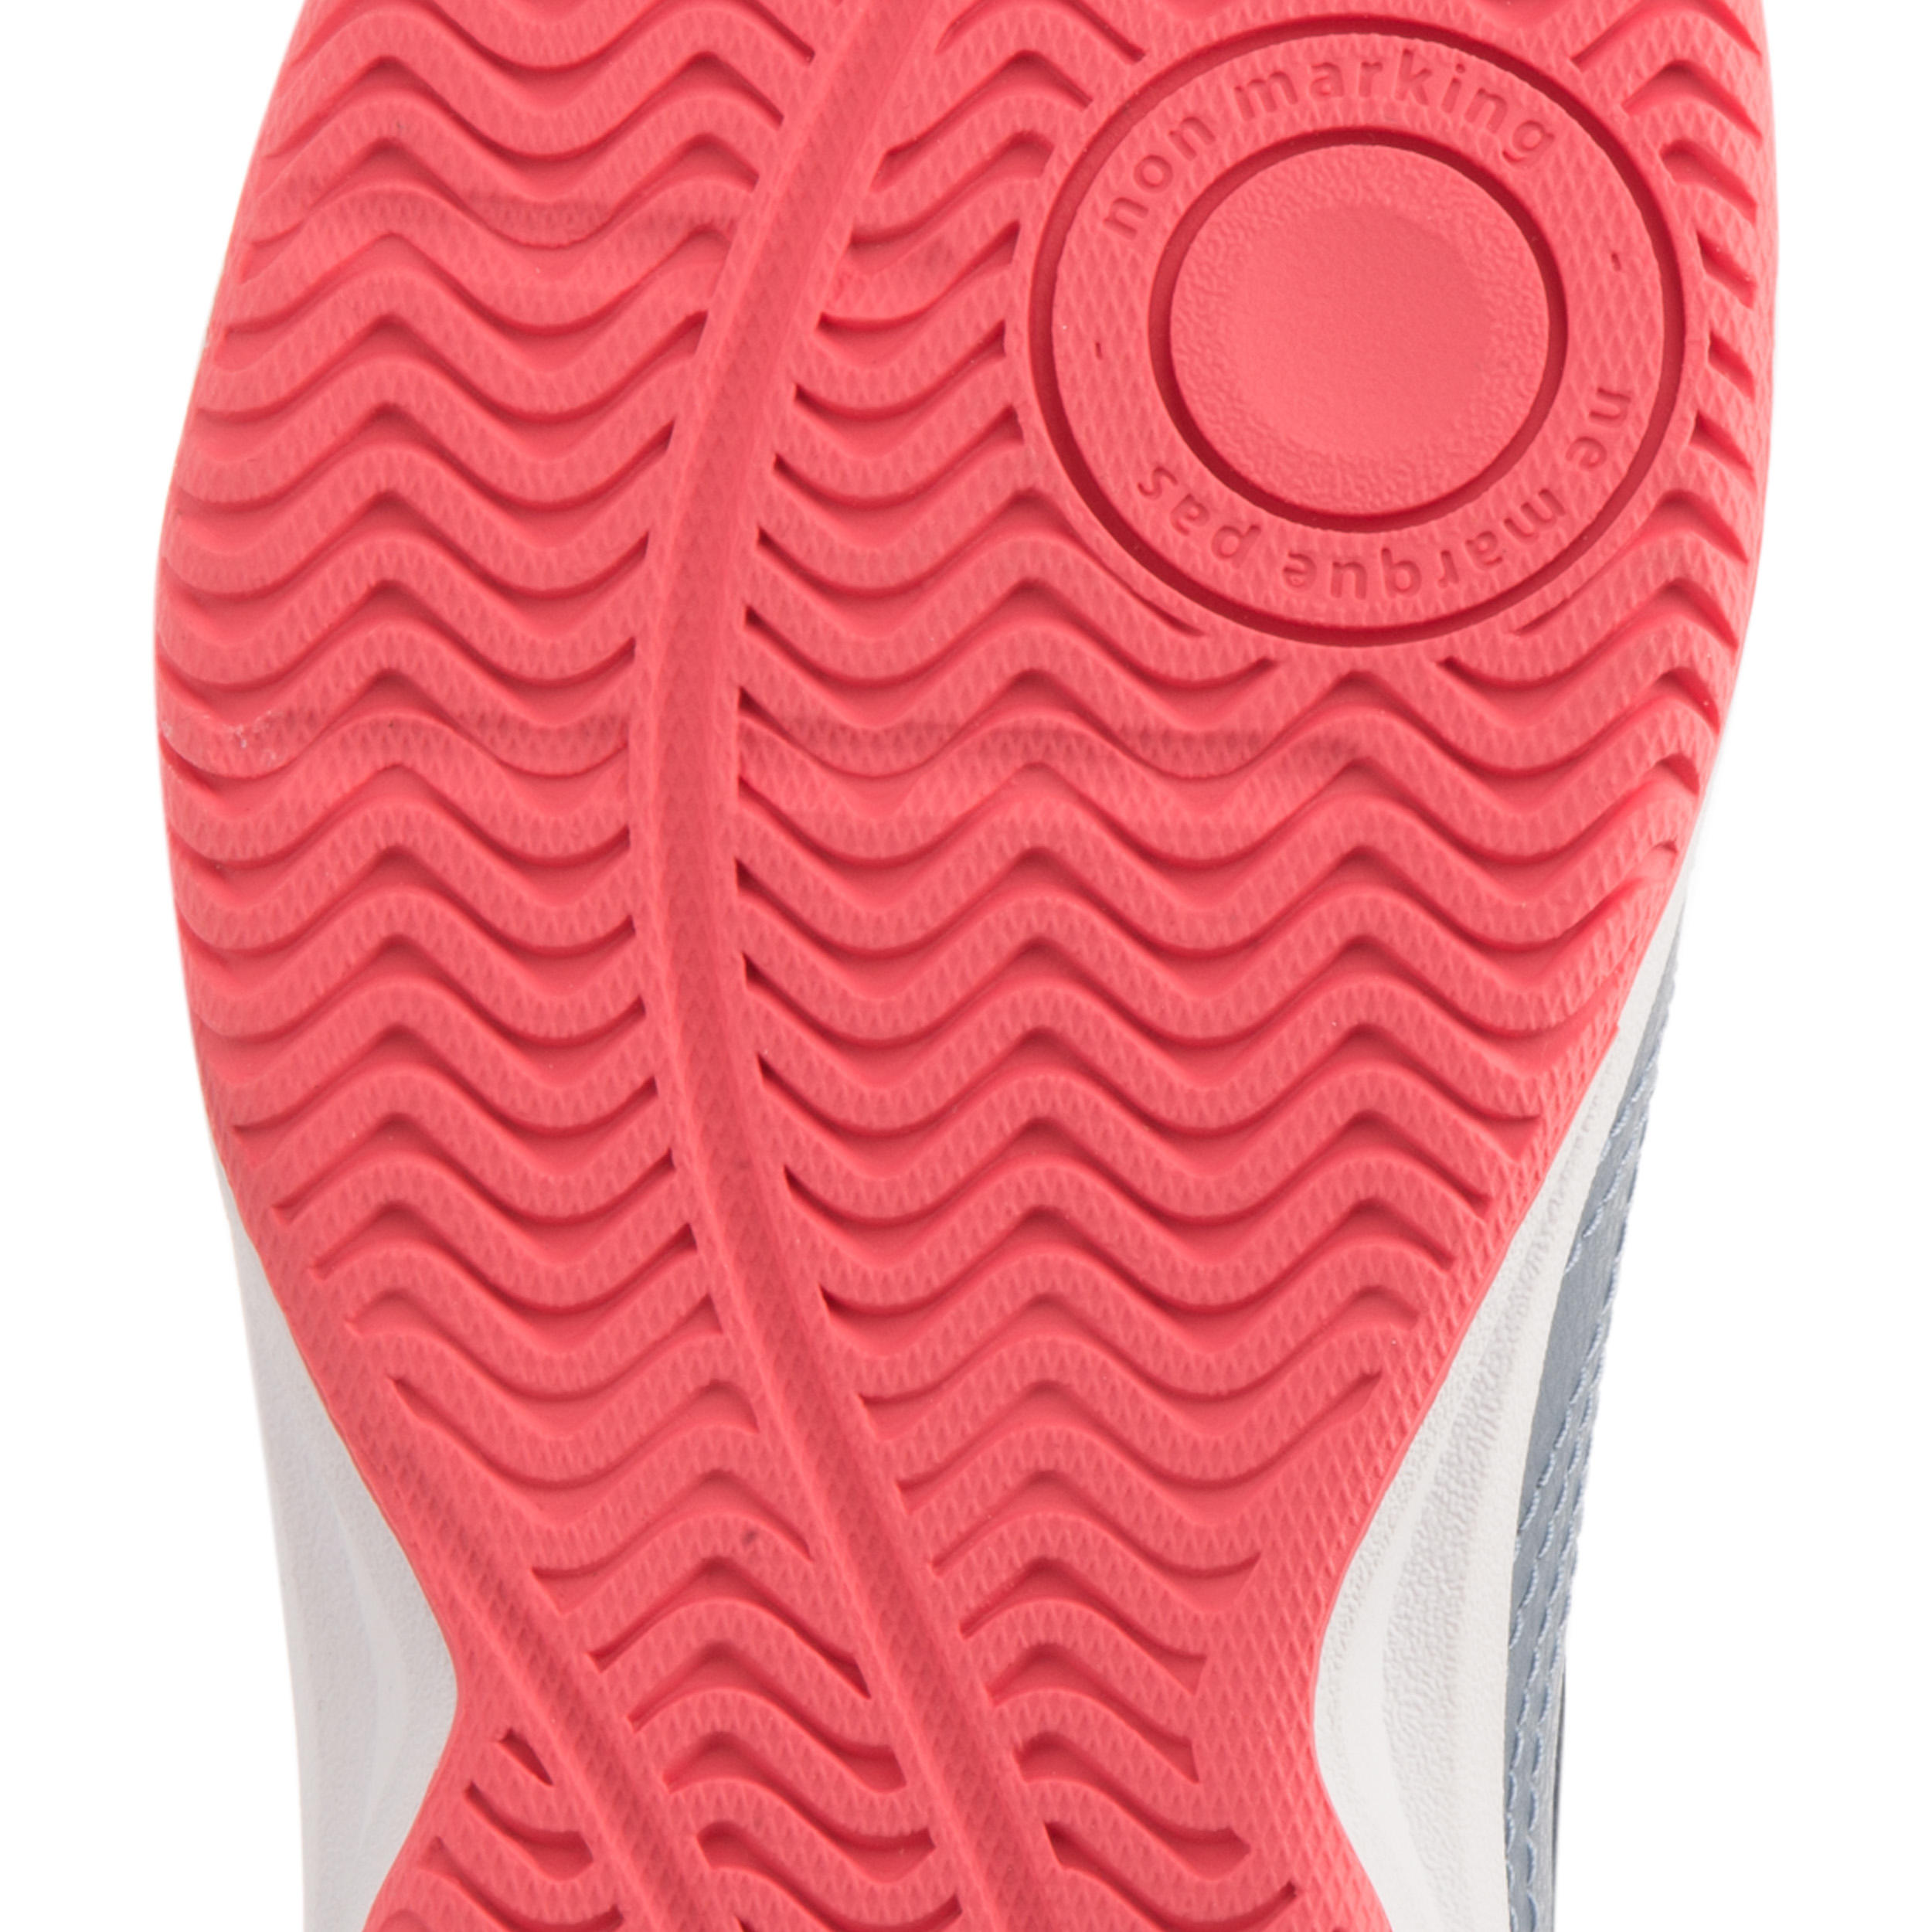 TS760 Kids' Tennis Shoes - Grey/Pink 10/10